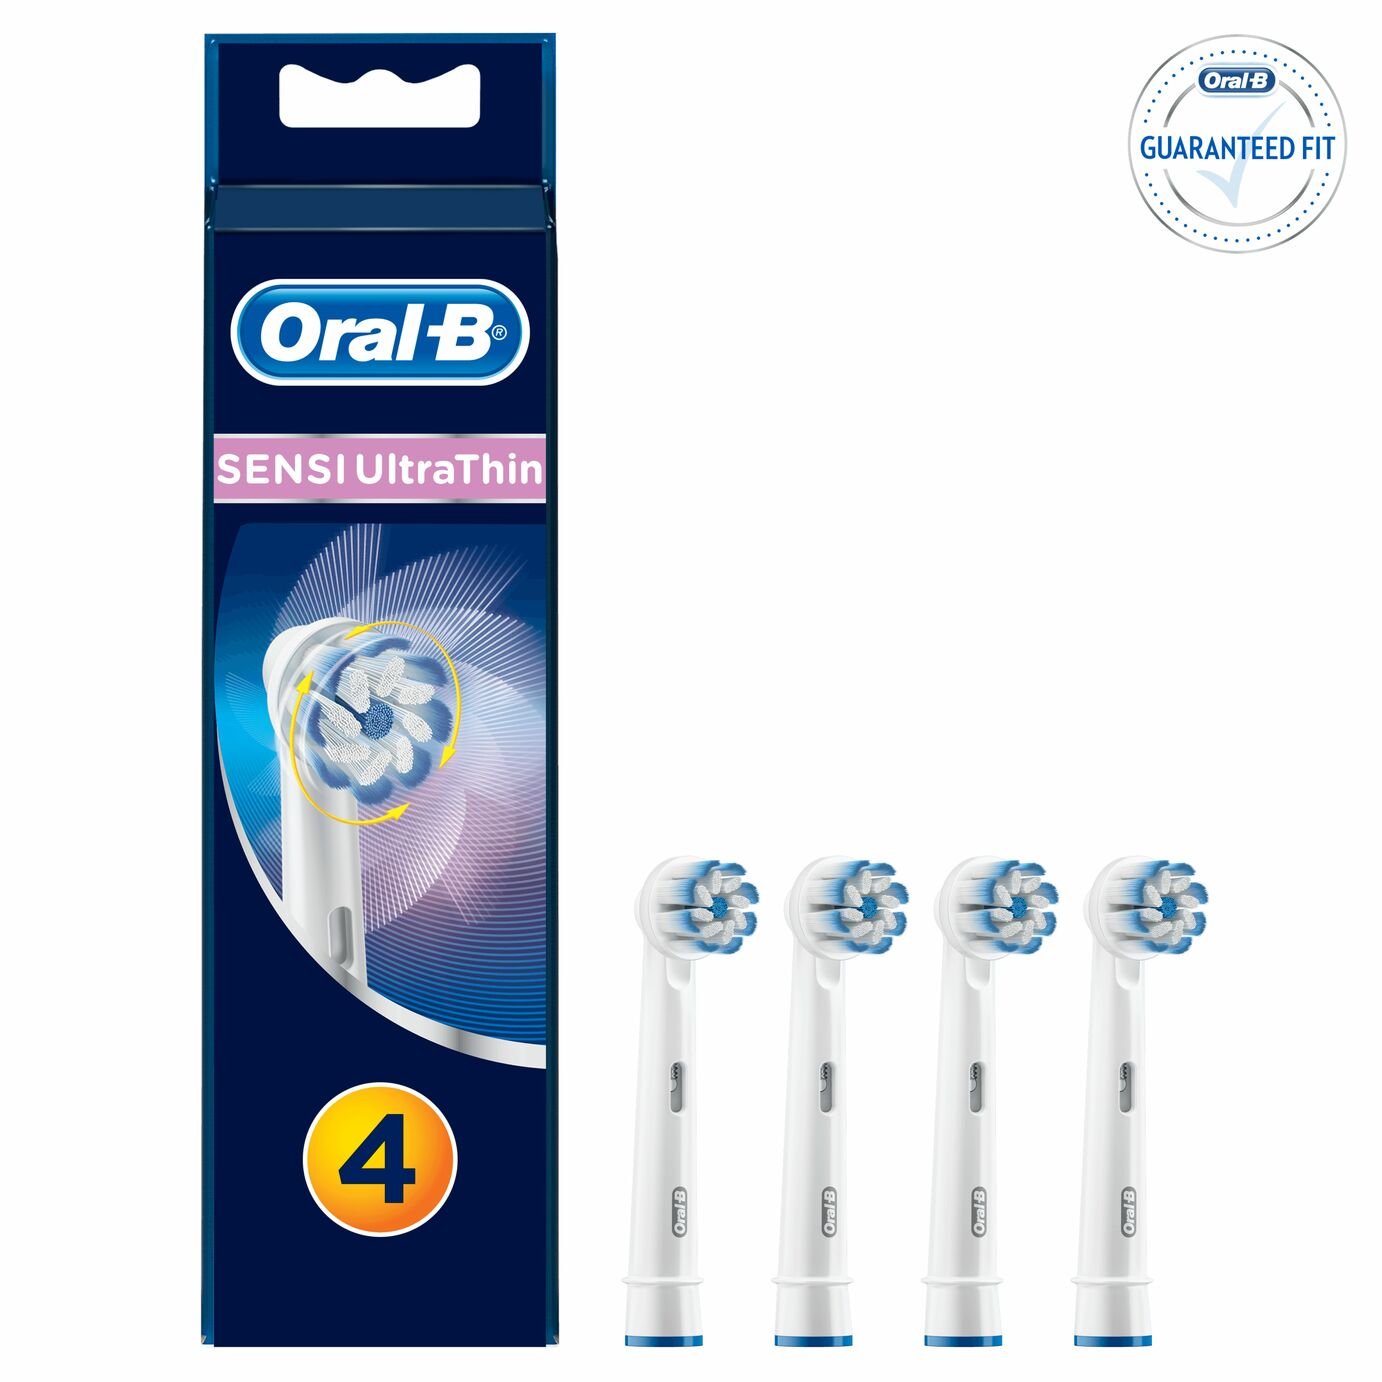 Oral-B Sensi UltraThin Electric Toothbrush Heads - 4 Pack